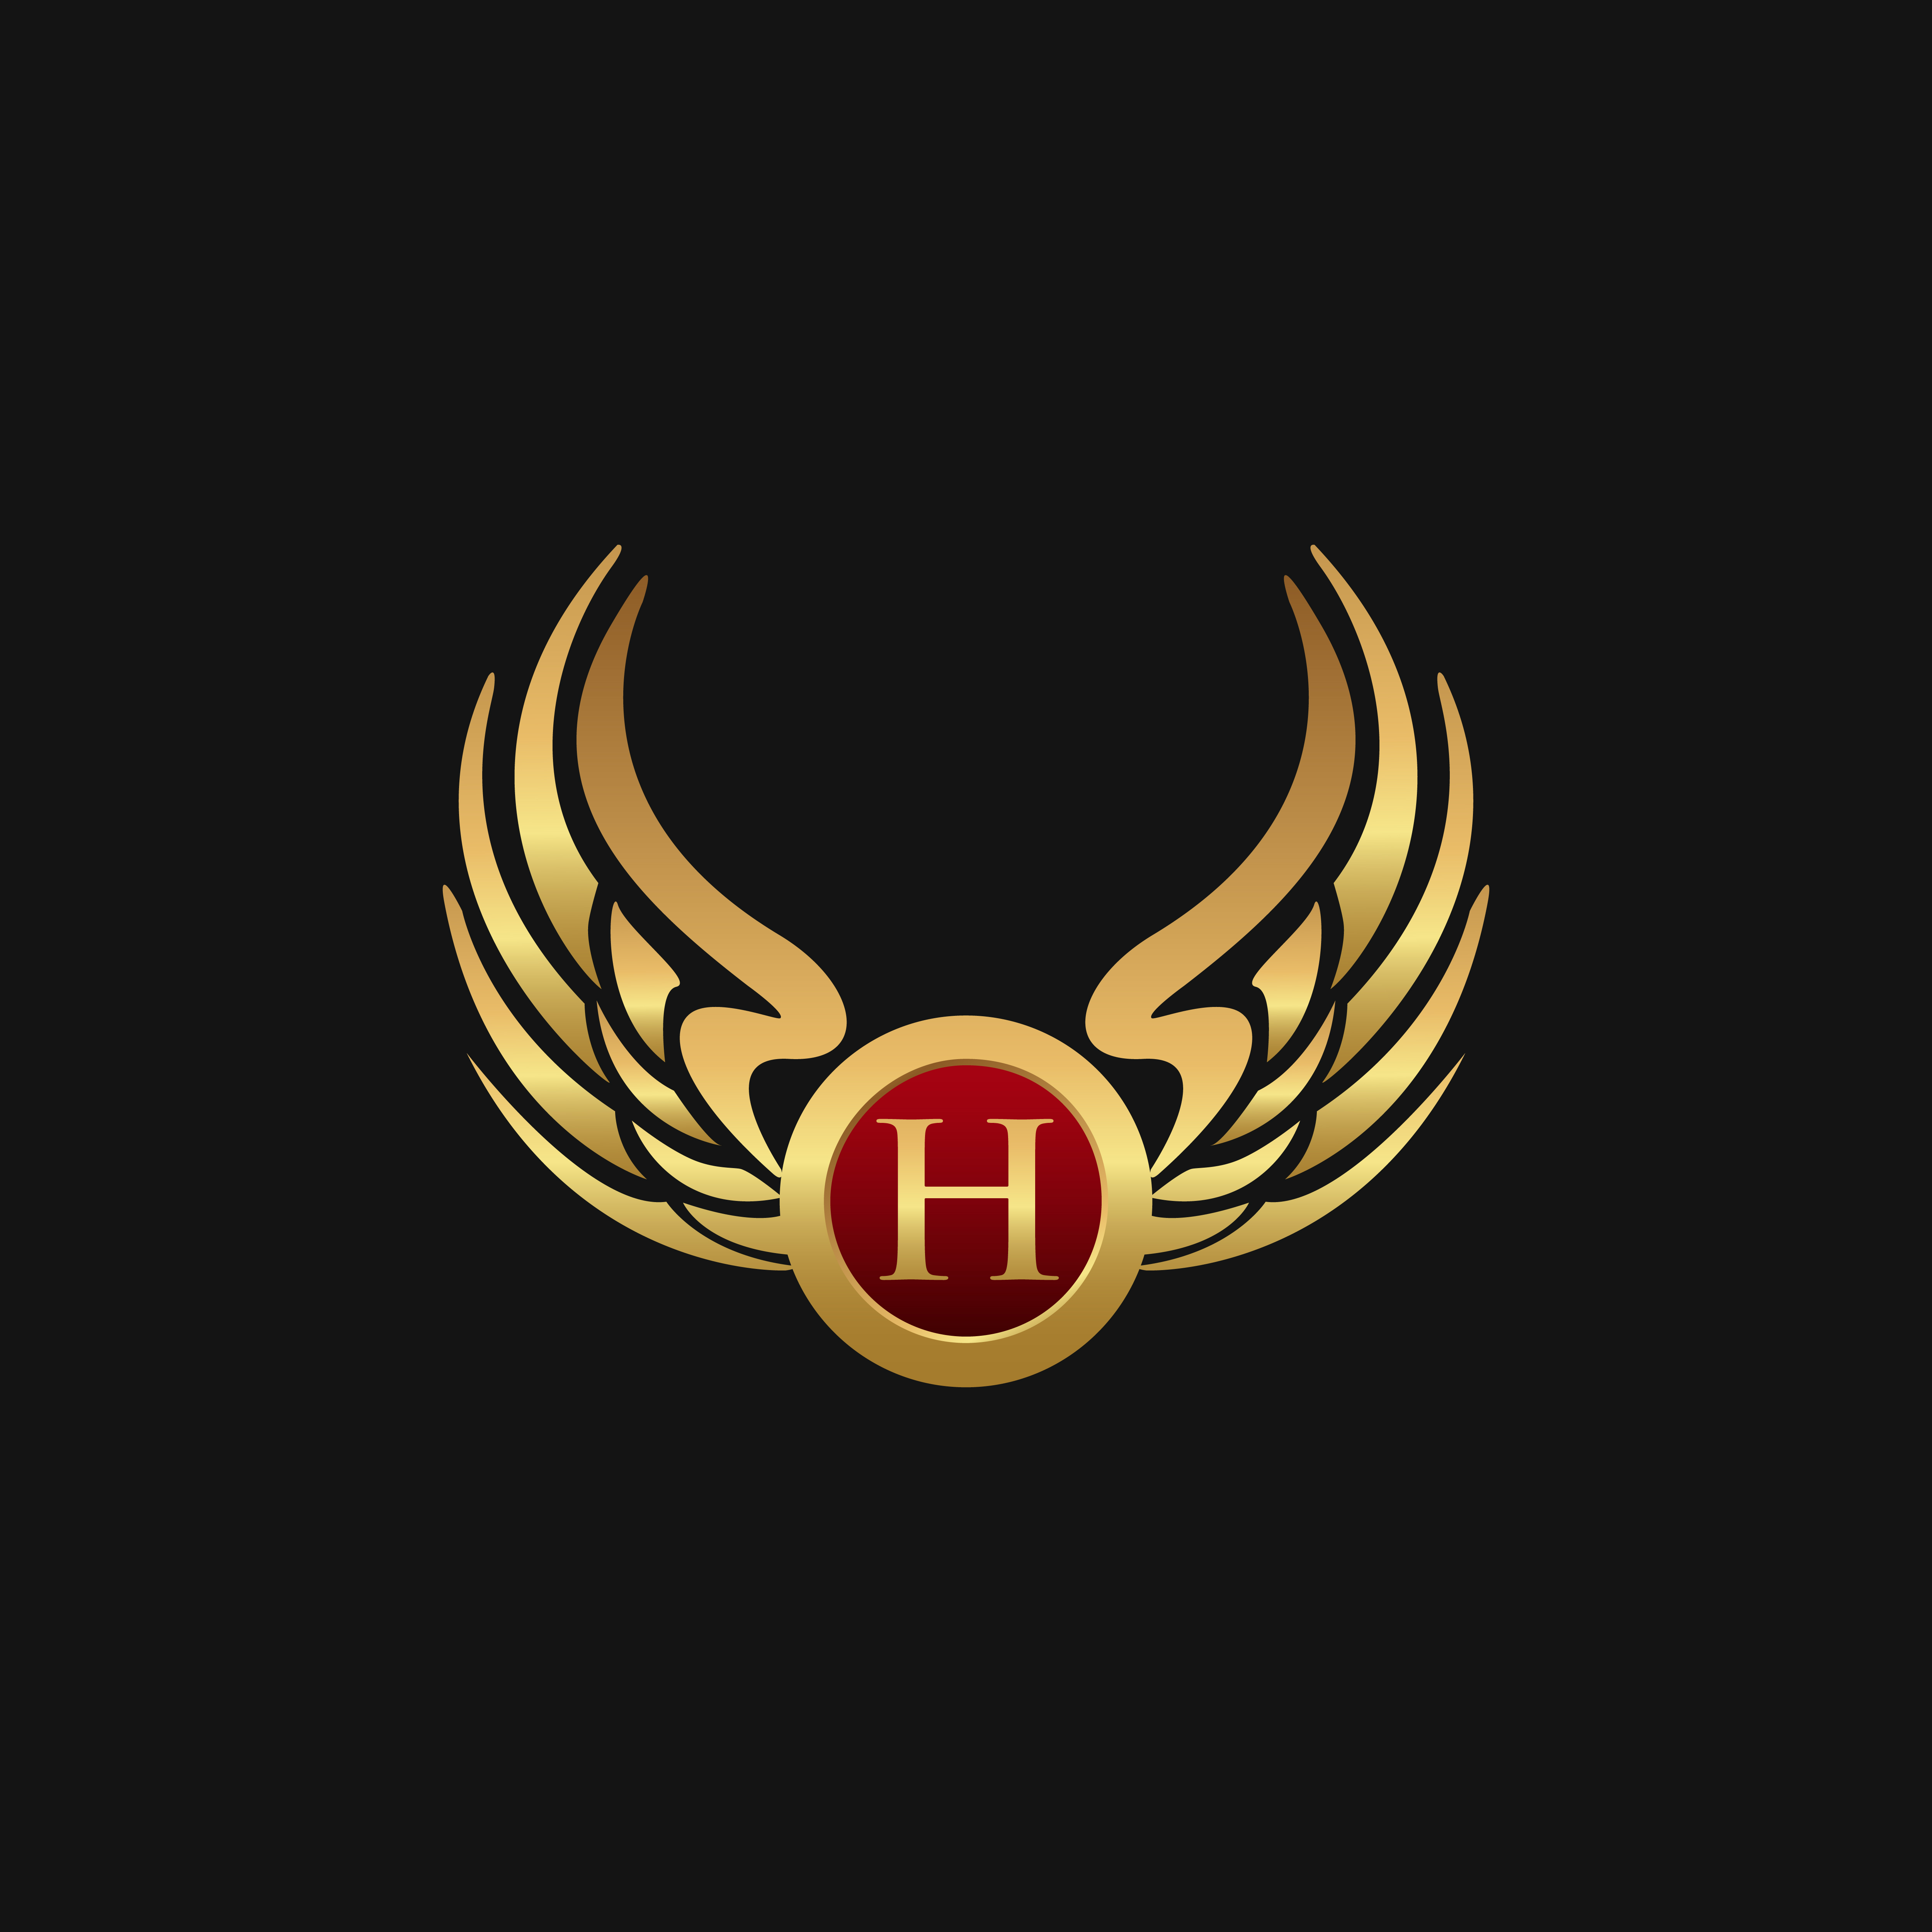 Luxury Letter H Emblem Wings logo design concept template - Download